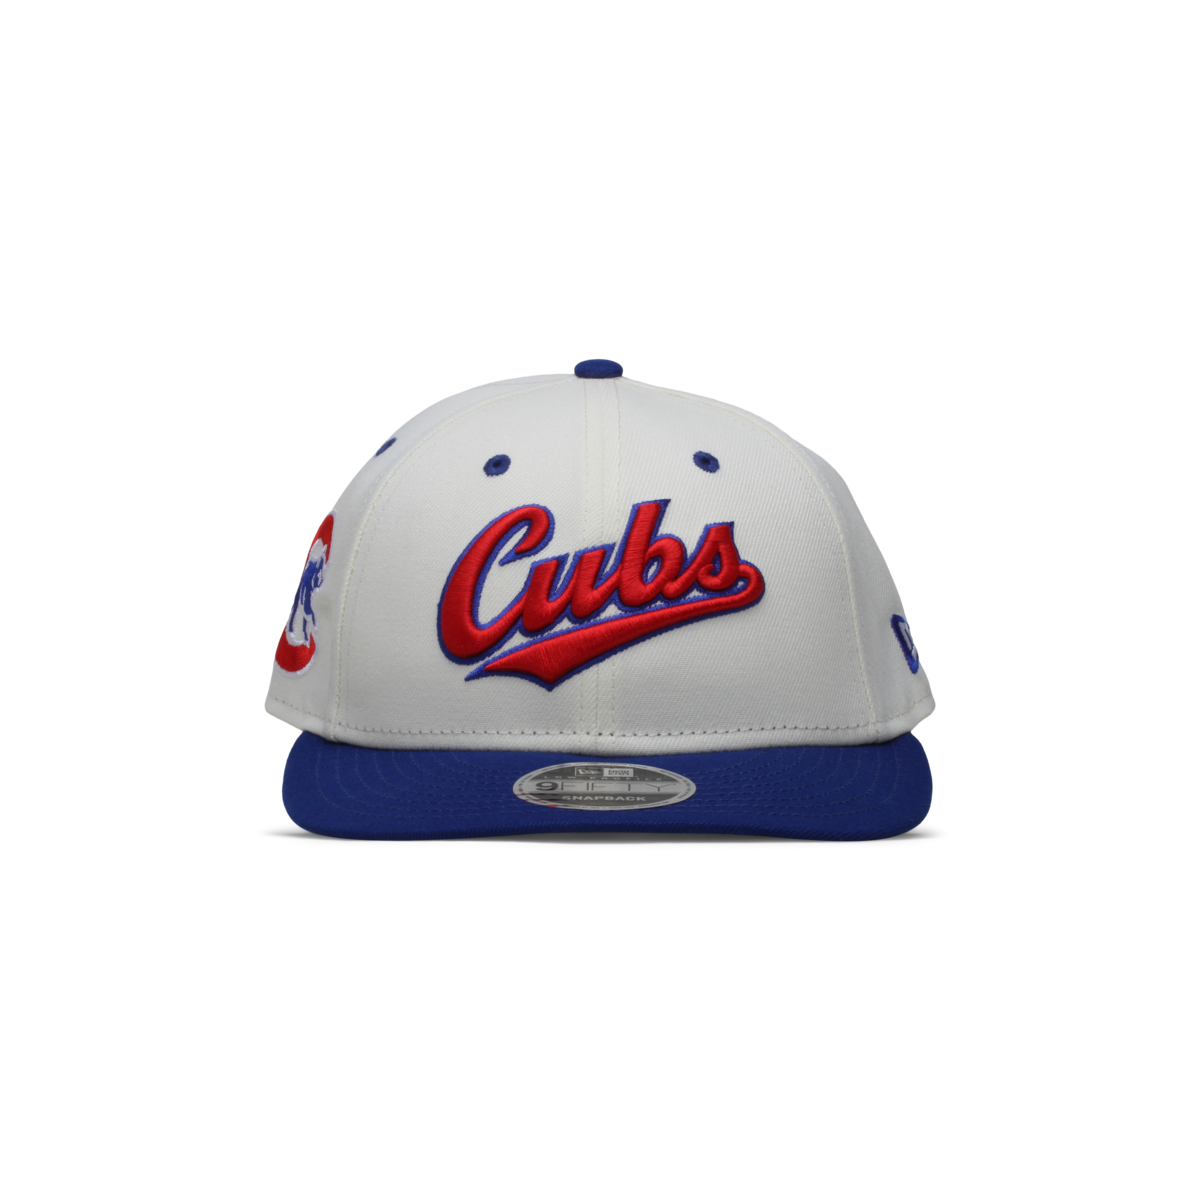 Chicago Cubs x FELT 9FIFTY Snapback Cap